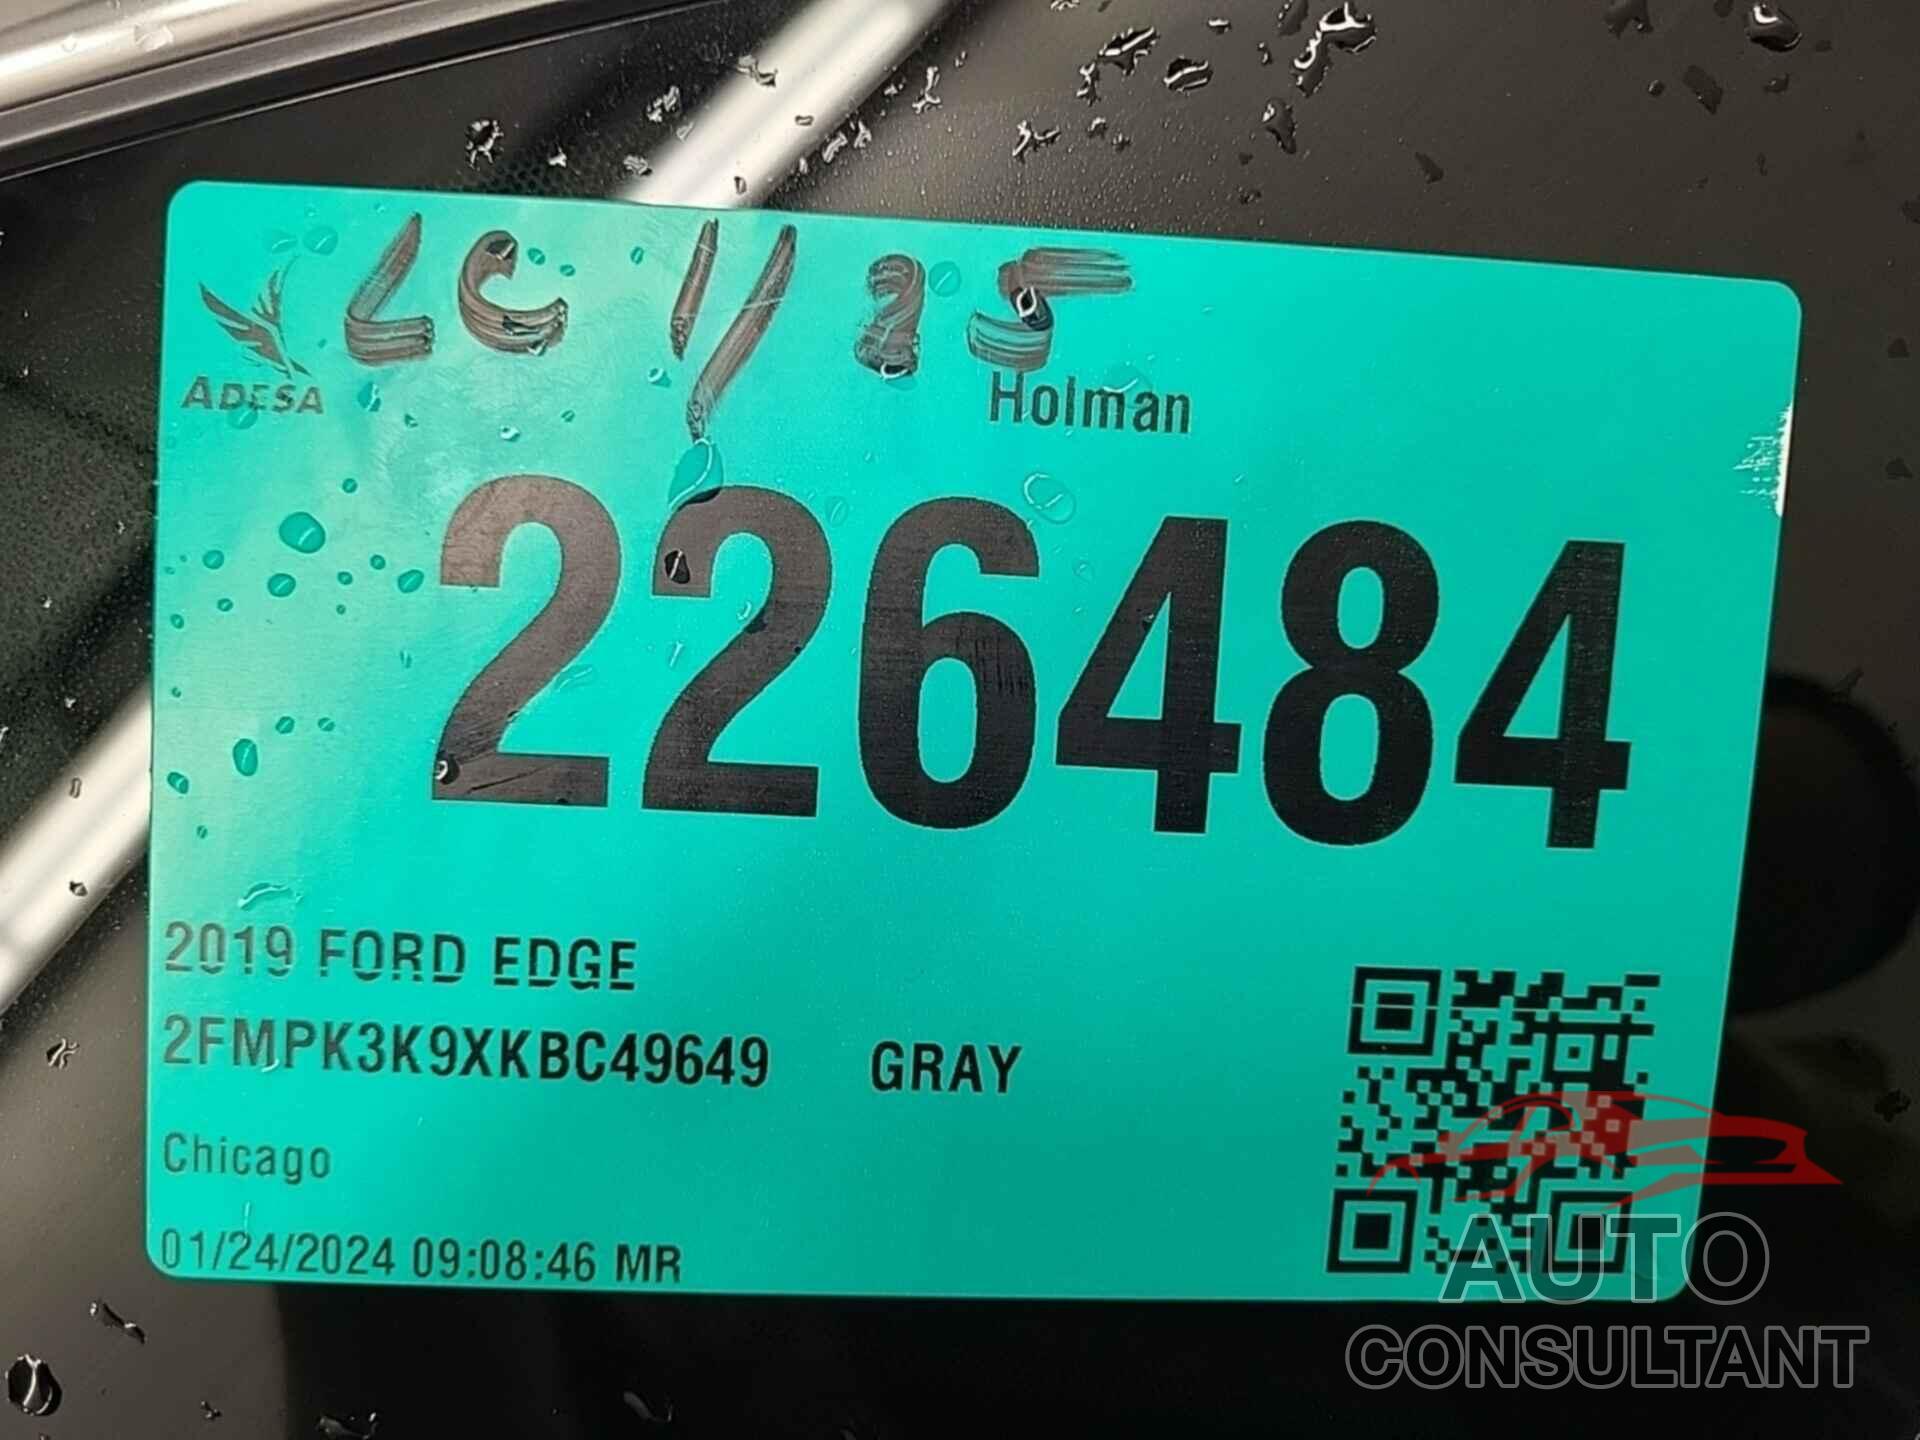 FORD EDGE 2019 - 2FMPK3K9XKBC49649